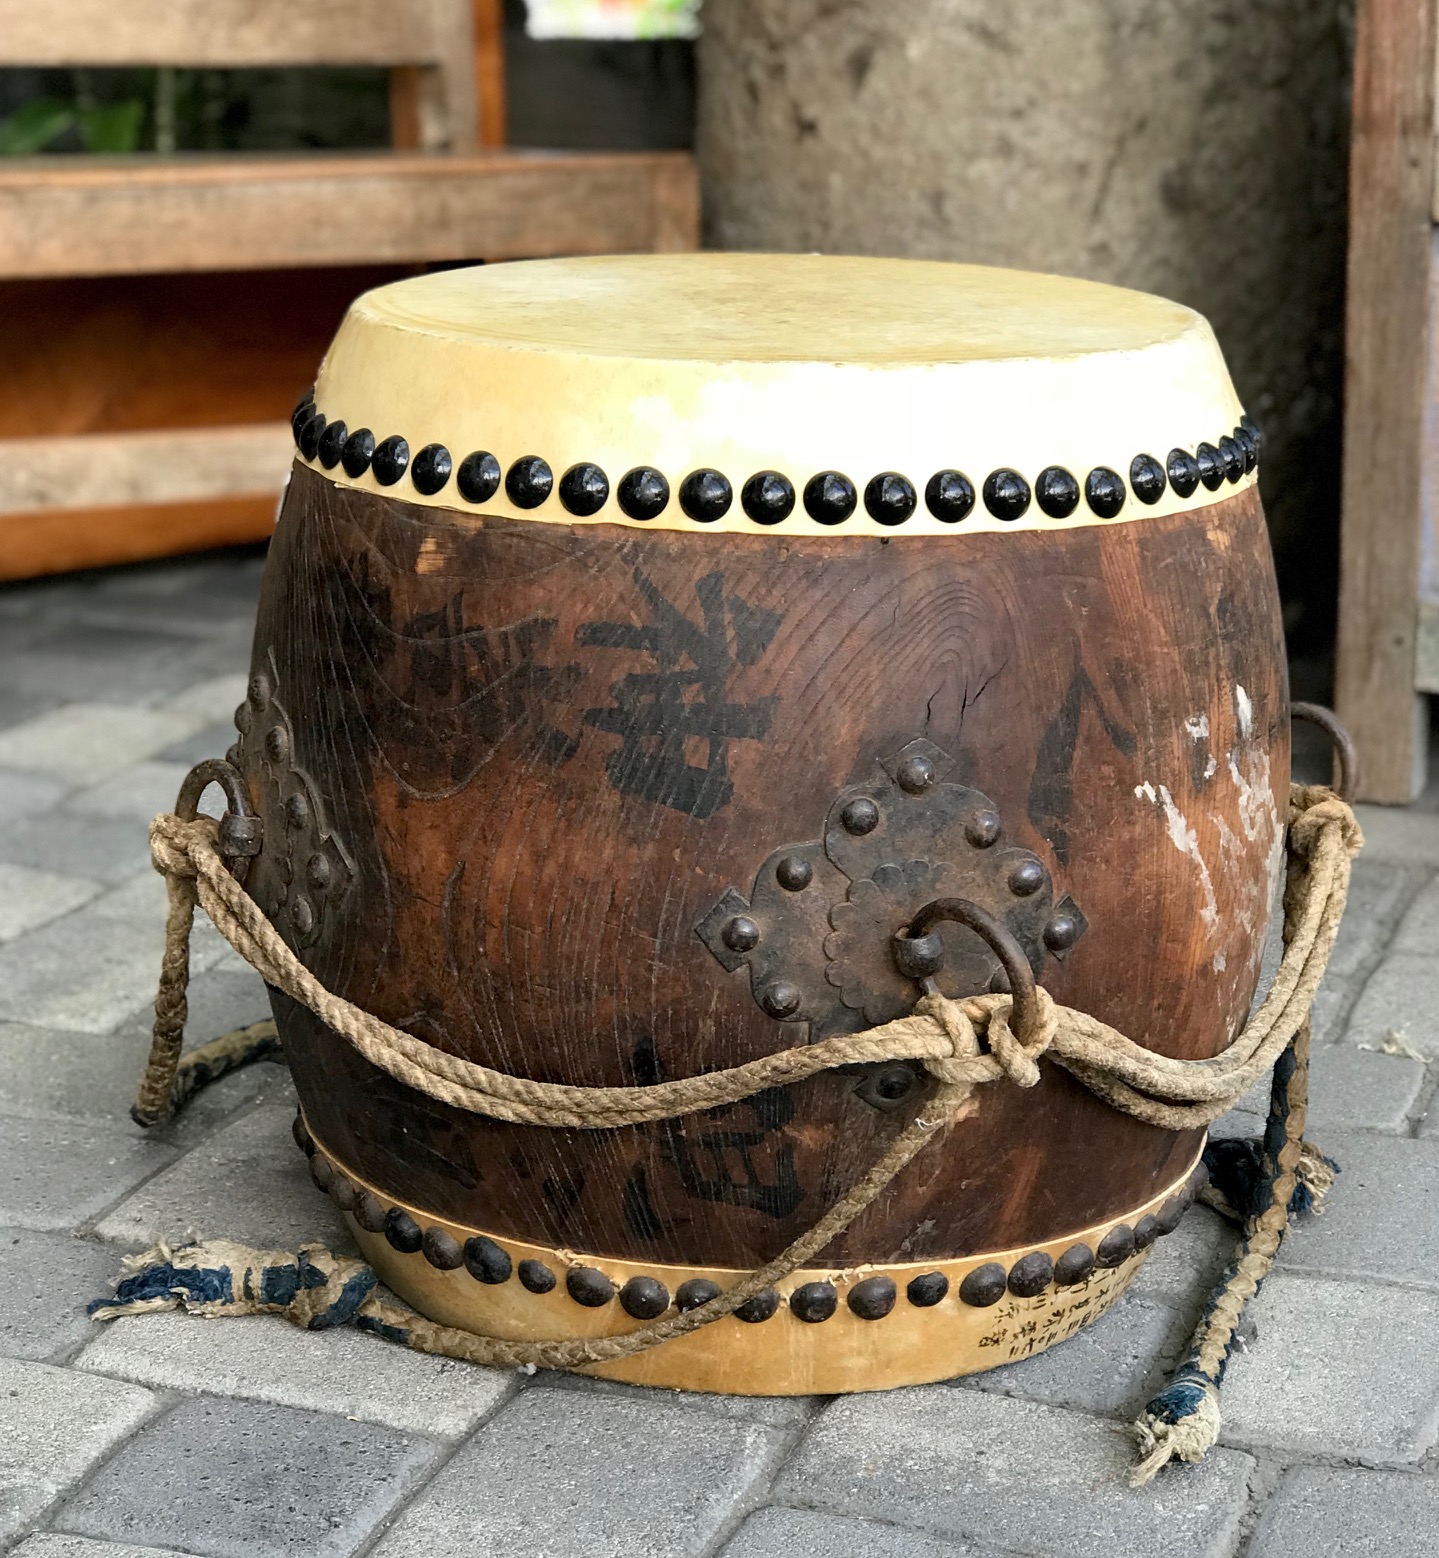 Japanese Taiko Style (tacked down) Drum, Japan, 19th c Edo Period, (new head skin and tacks), wood, rawhide, rope, iron rings and tacks, ink/paint, 20" x 24", $1200.; thedavidalancollection.com , solana beach, ca